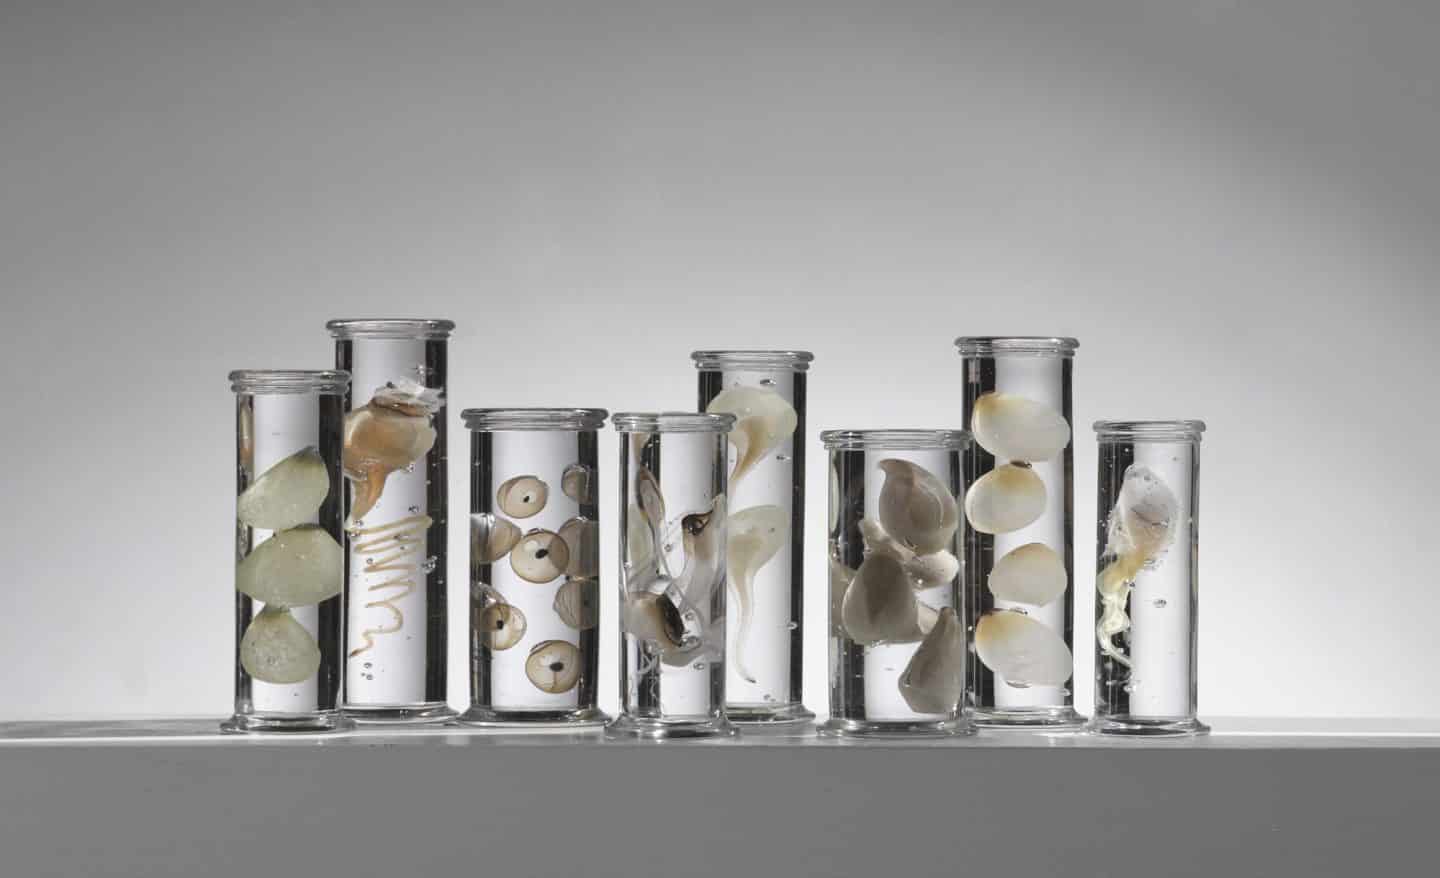 steffen damm escultura de especimenes de la naturaleza en vidrio new medicine detalle